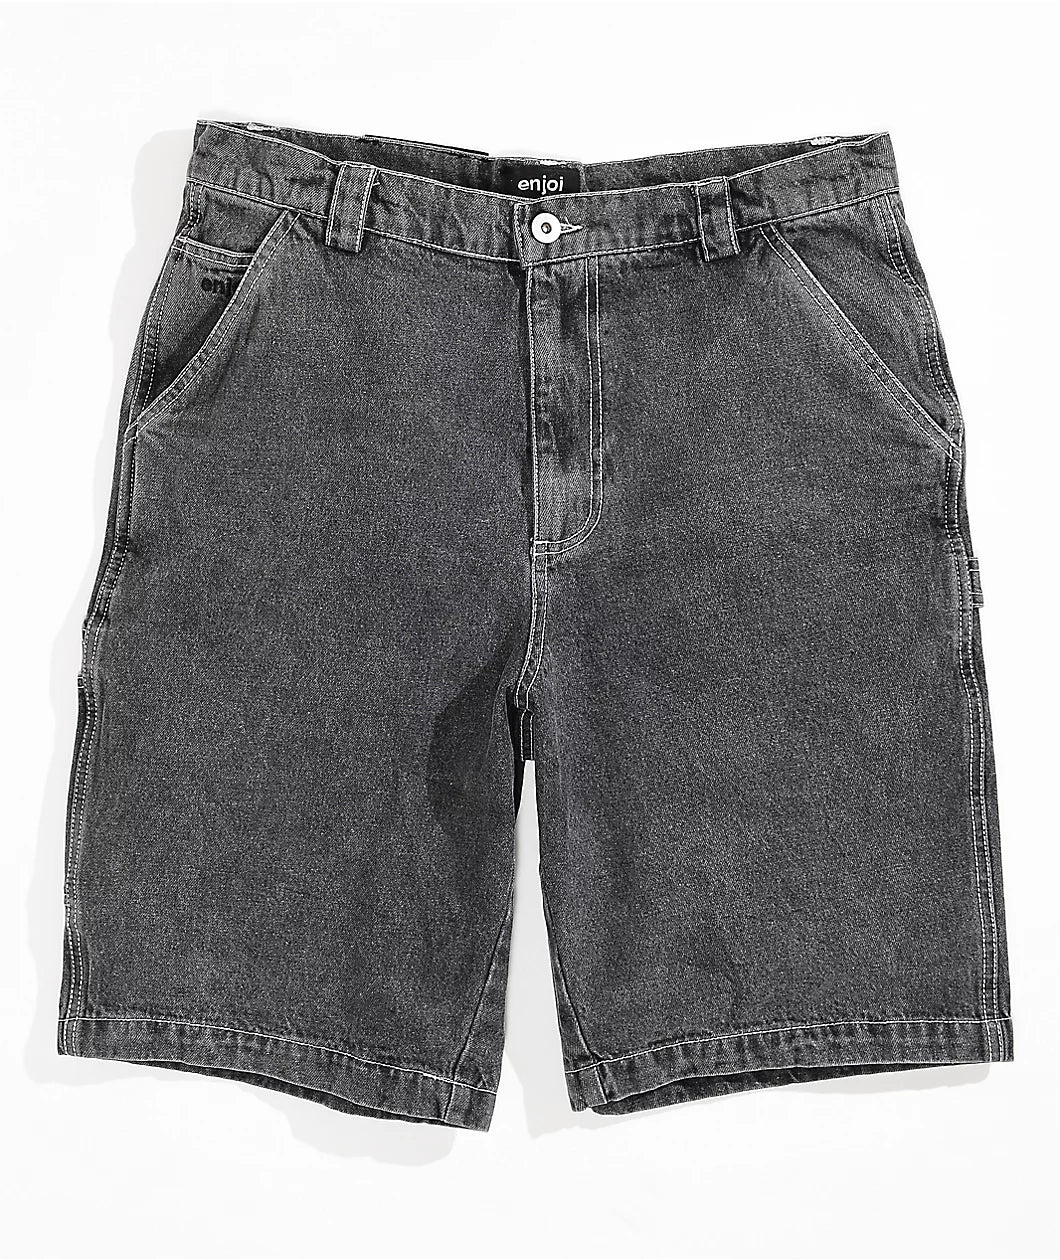 SALE - Enjoi 40oz Charcoal Denim Shorts